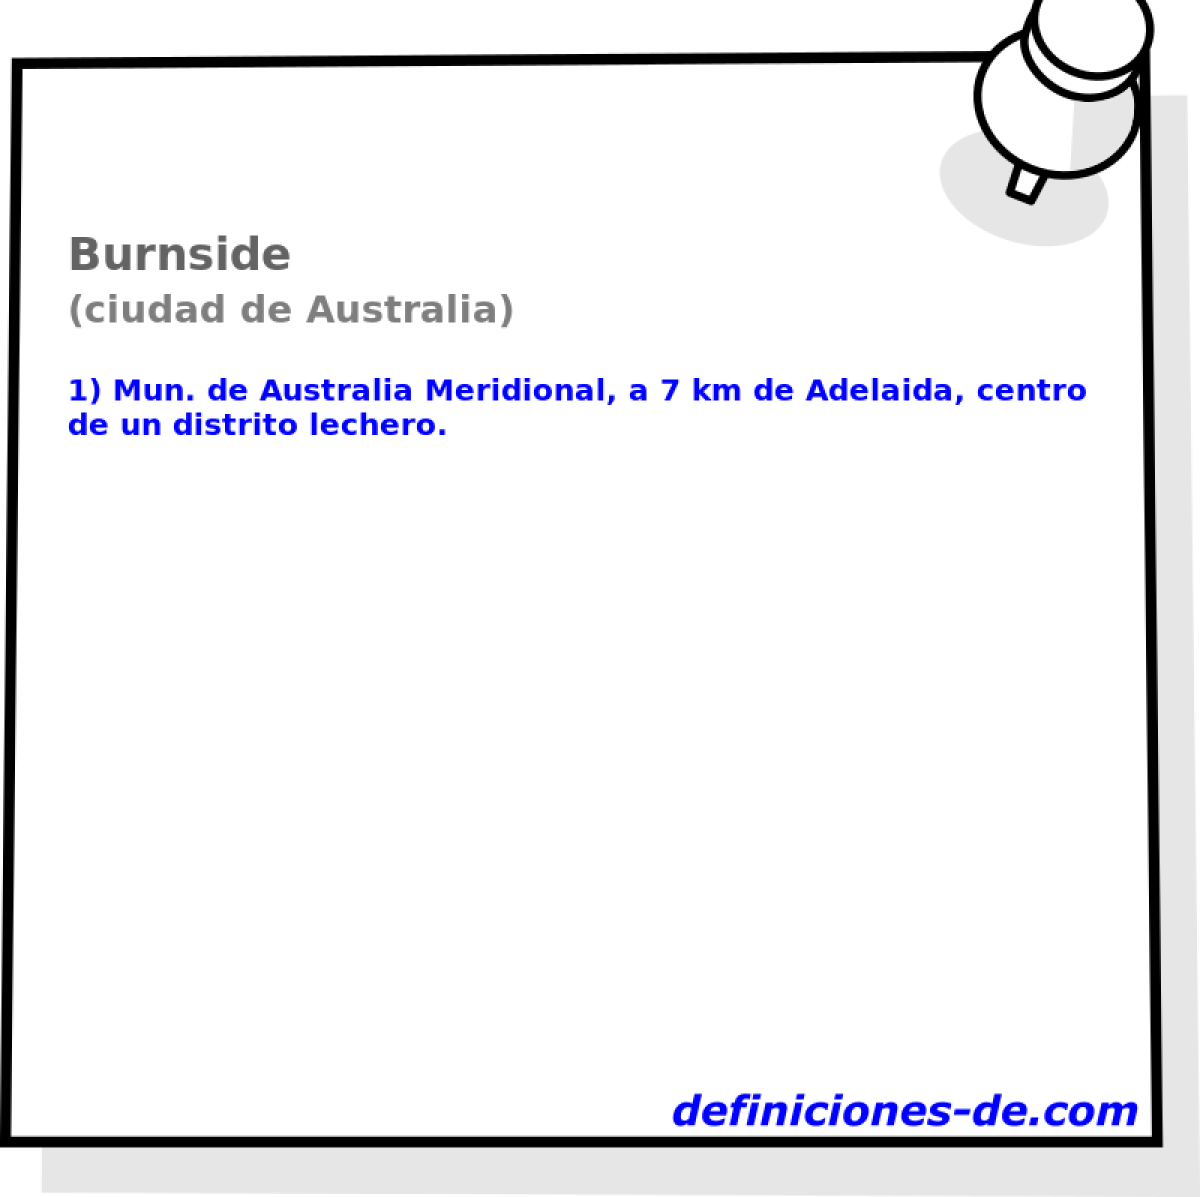 Burnside (ciudad de Australia)